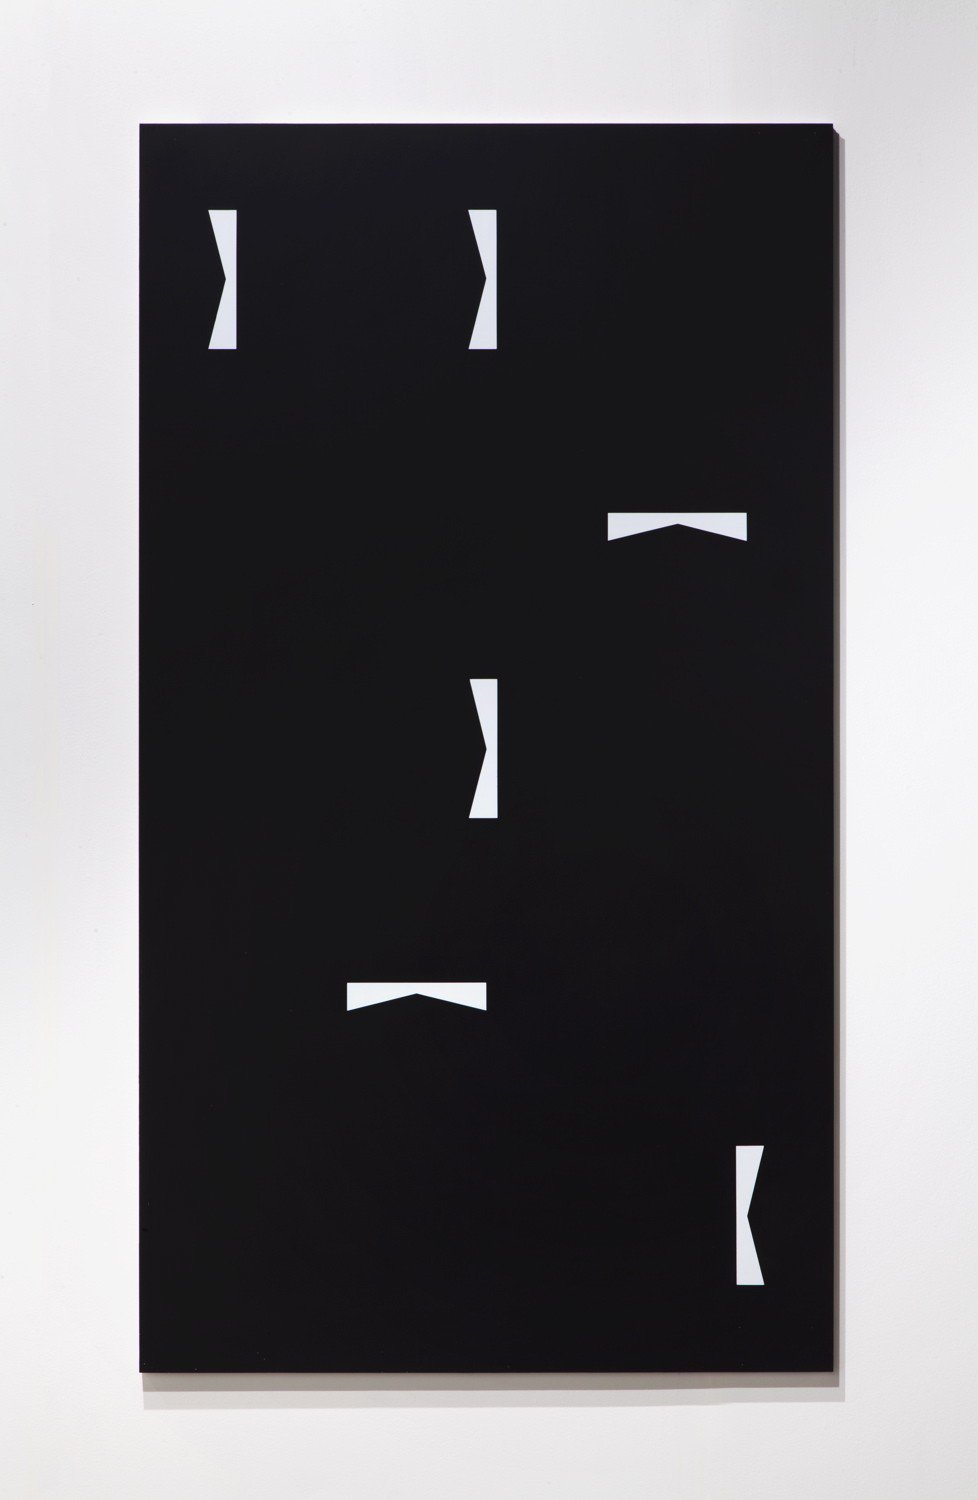 Nick OberthalerUntitled, 2014Acrylic on aluminium180 x 100 cm